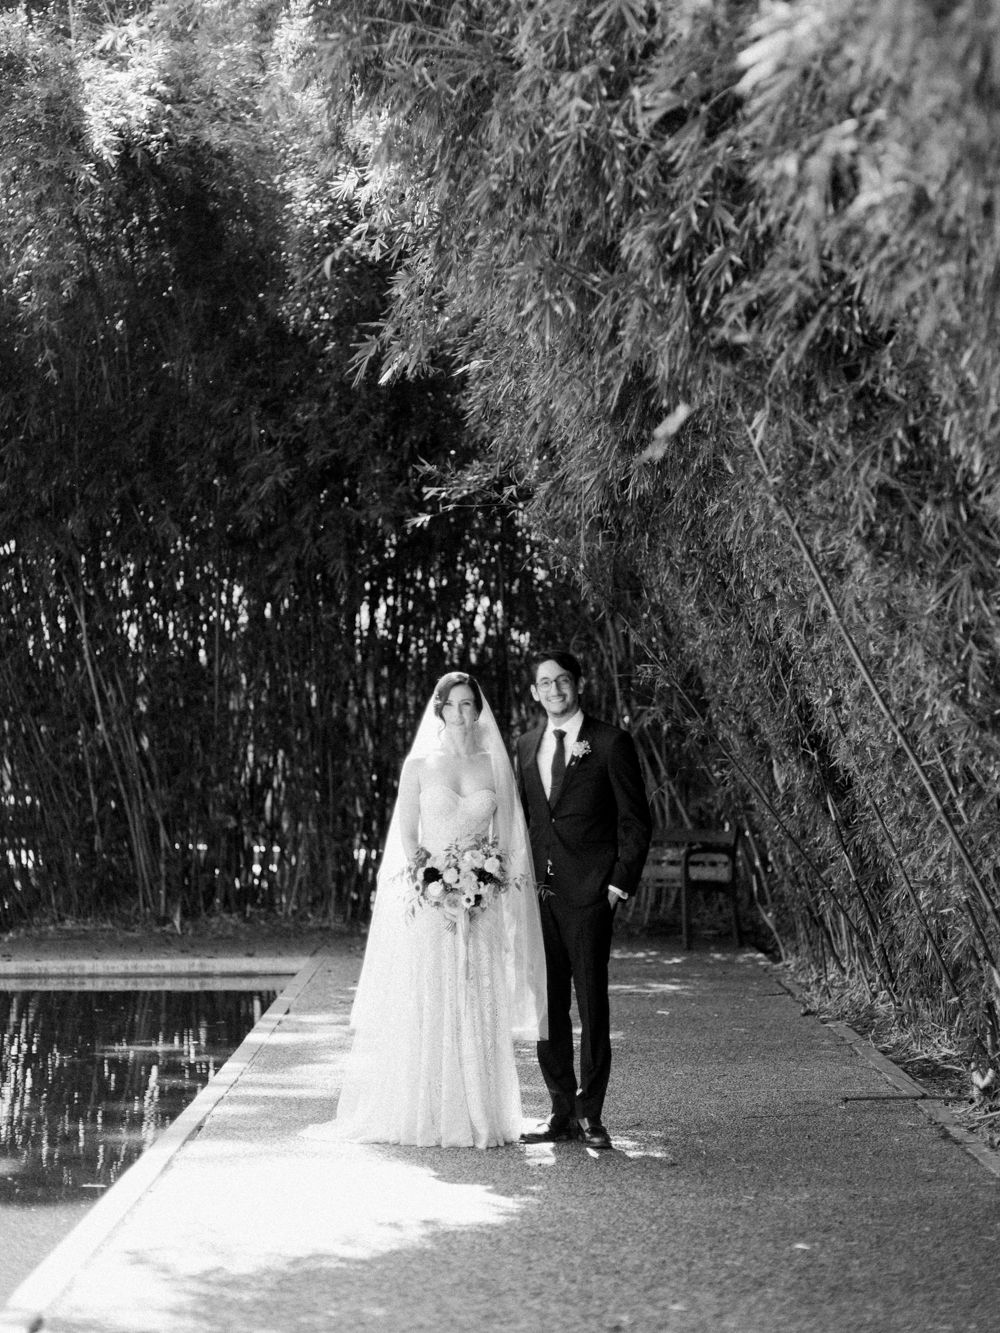 fall wedding at rothko chapel- houston wedding photographer-christine gosch - film photographer - elopement photographer- intimate wedding - lovely bride wedding gown-15.jpg